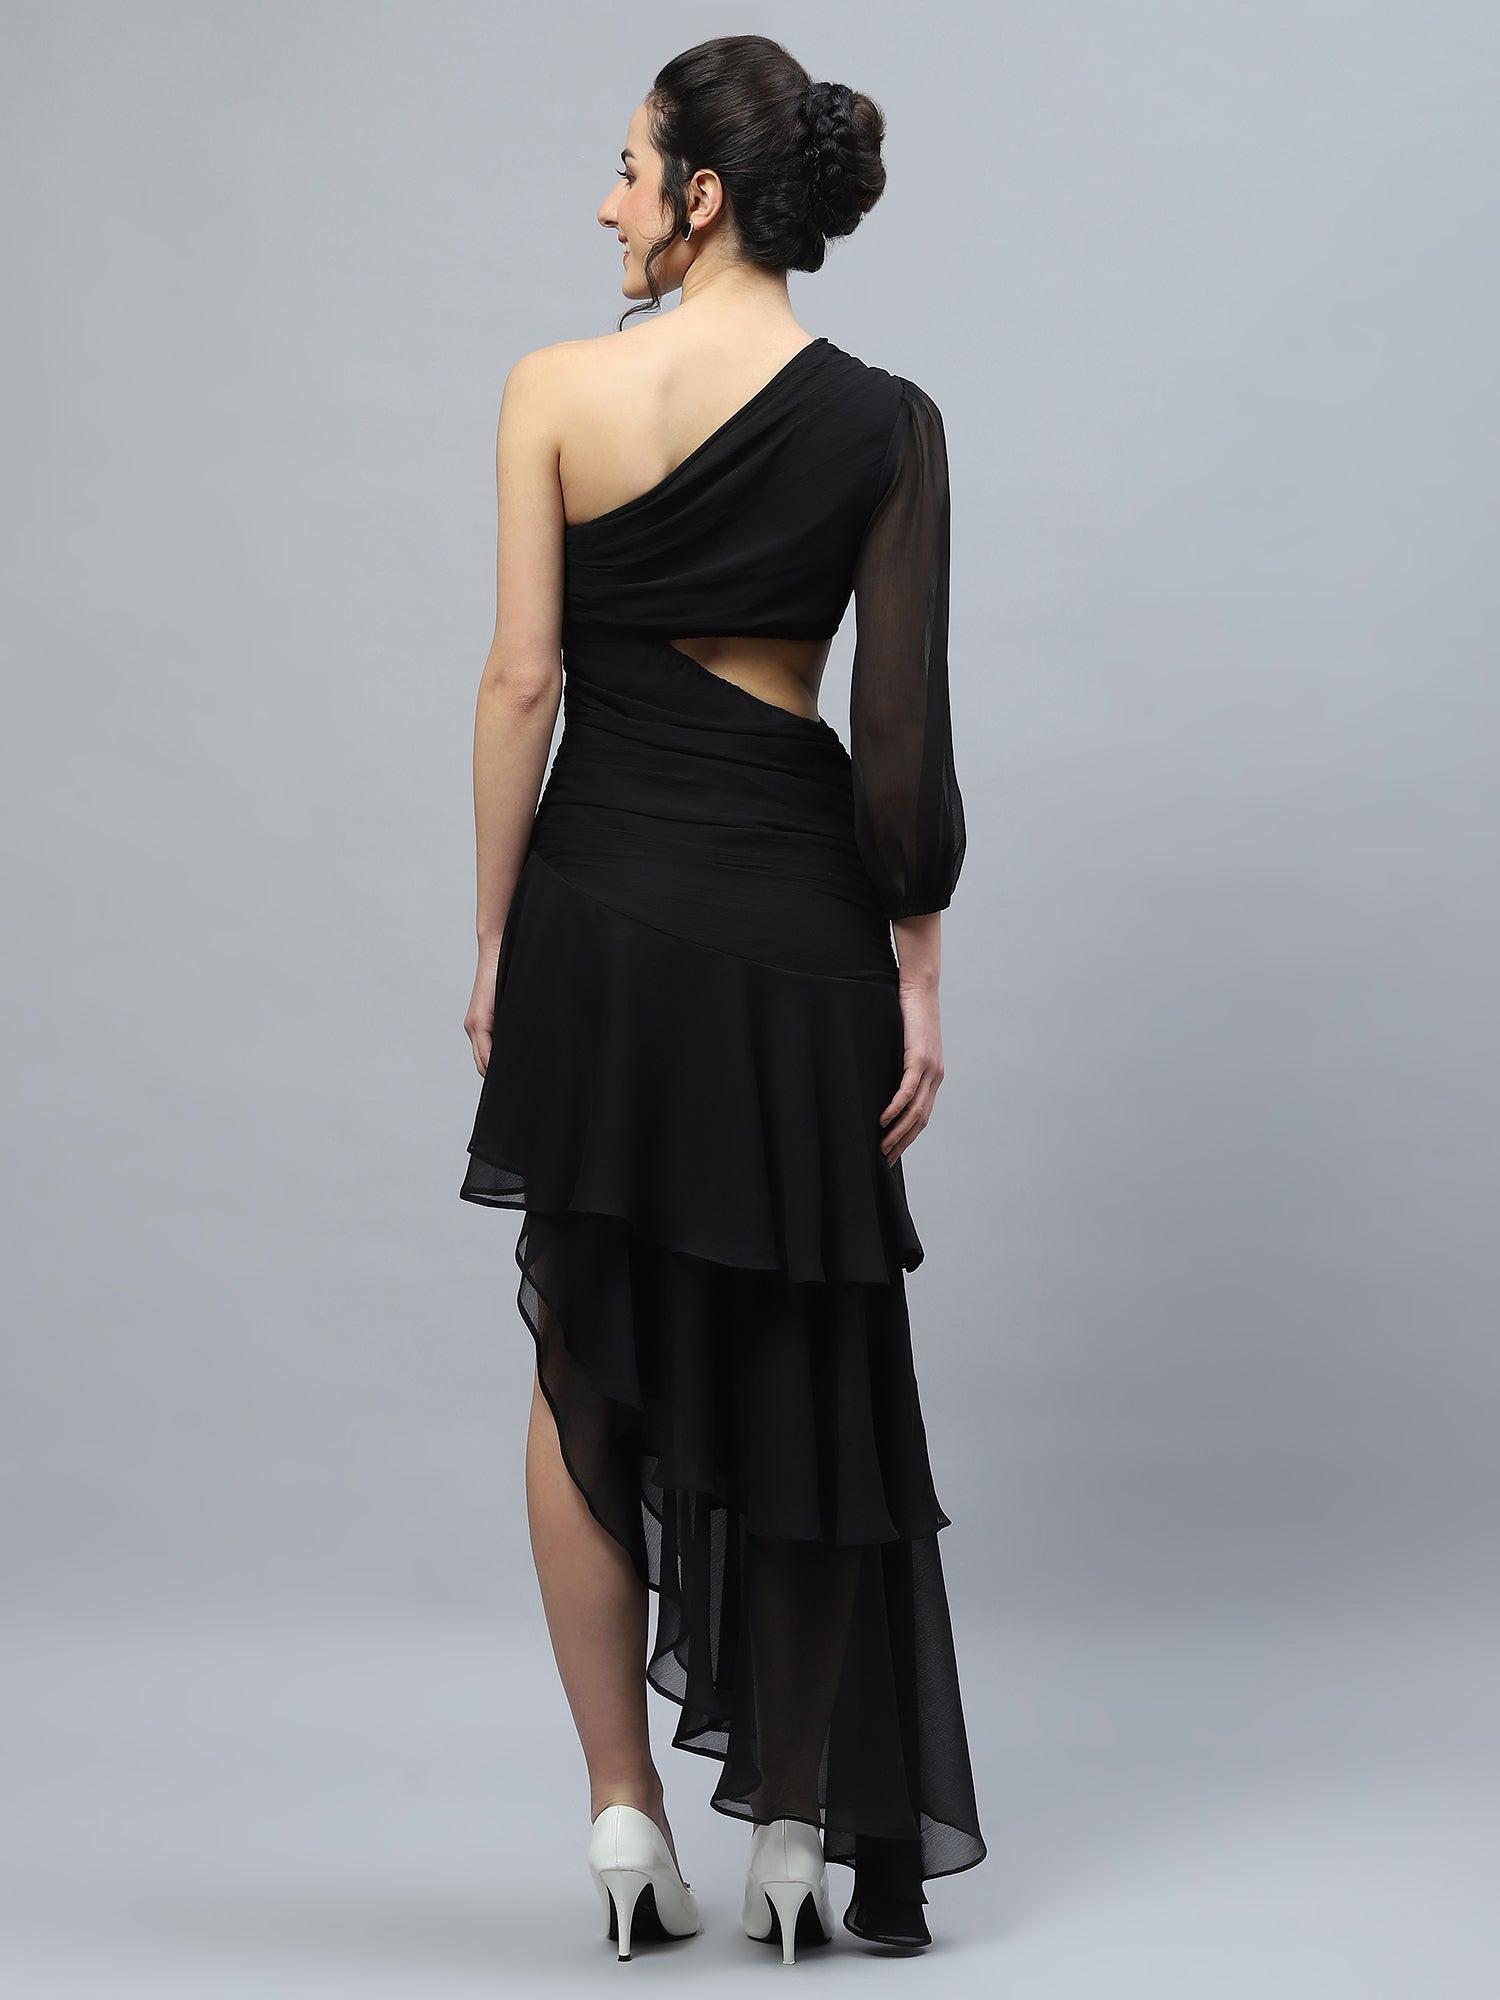 High-Low Cut-Out Black Dress